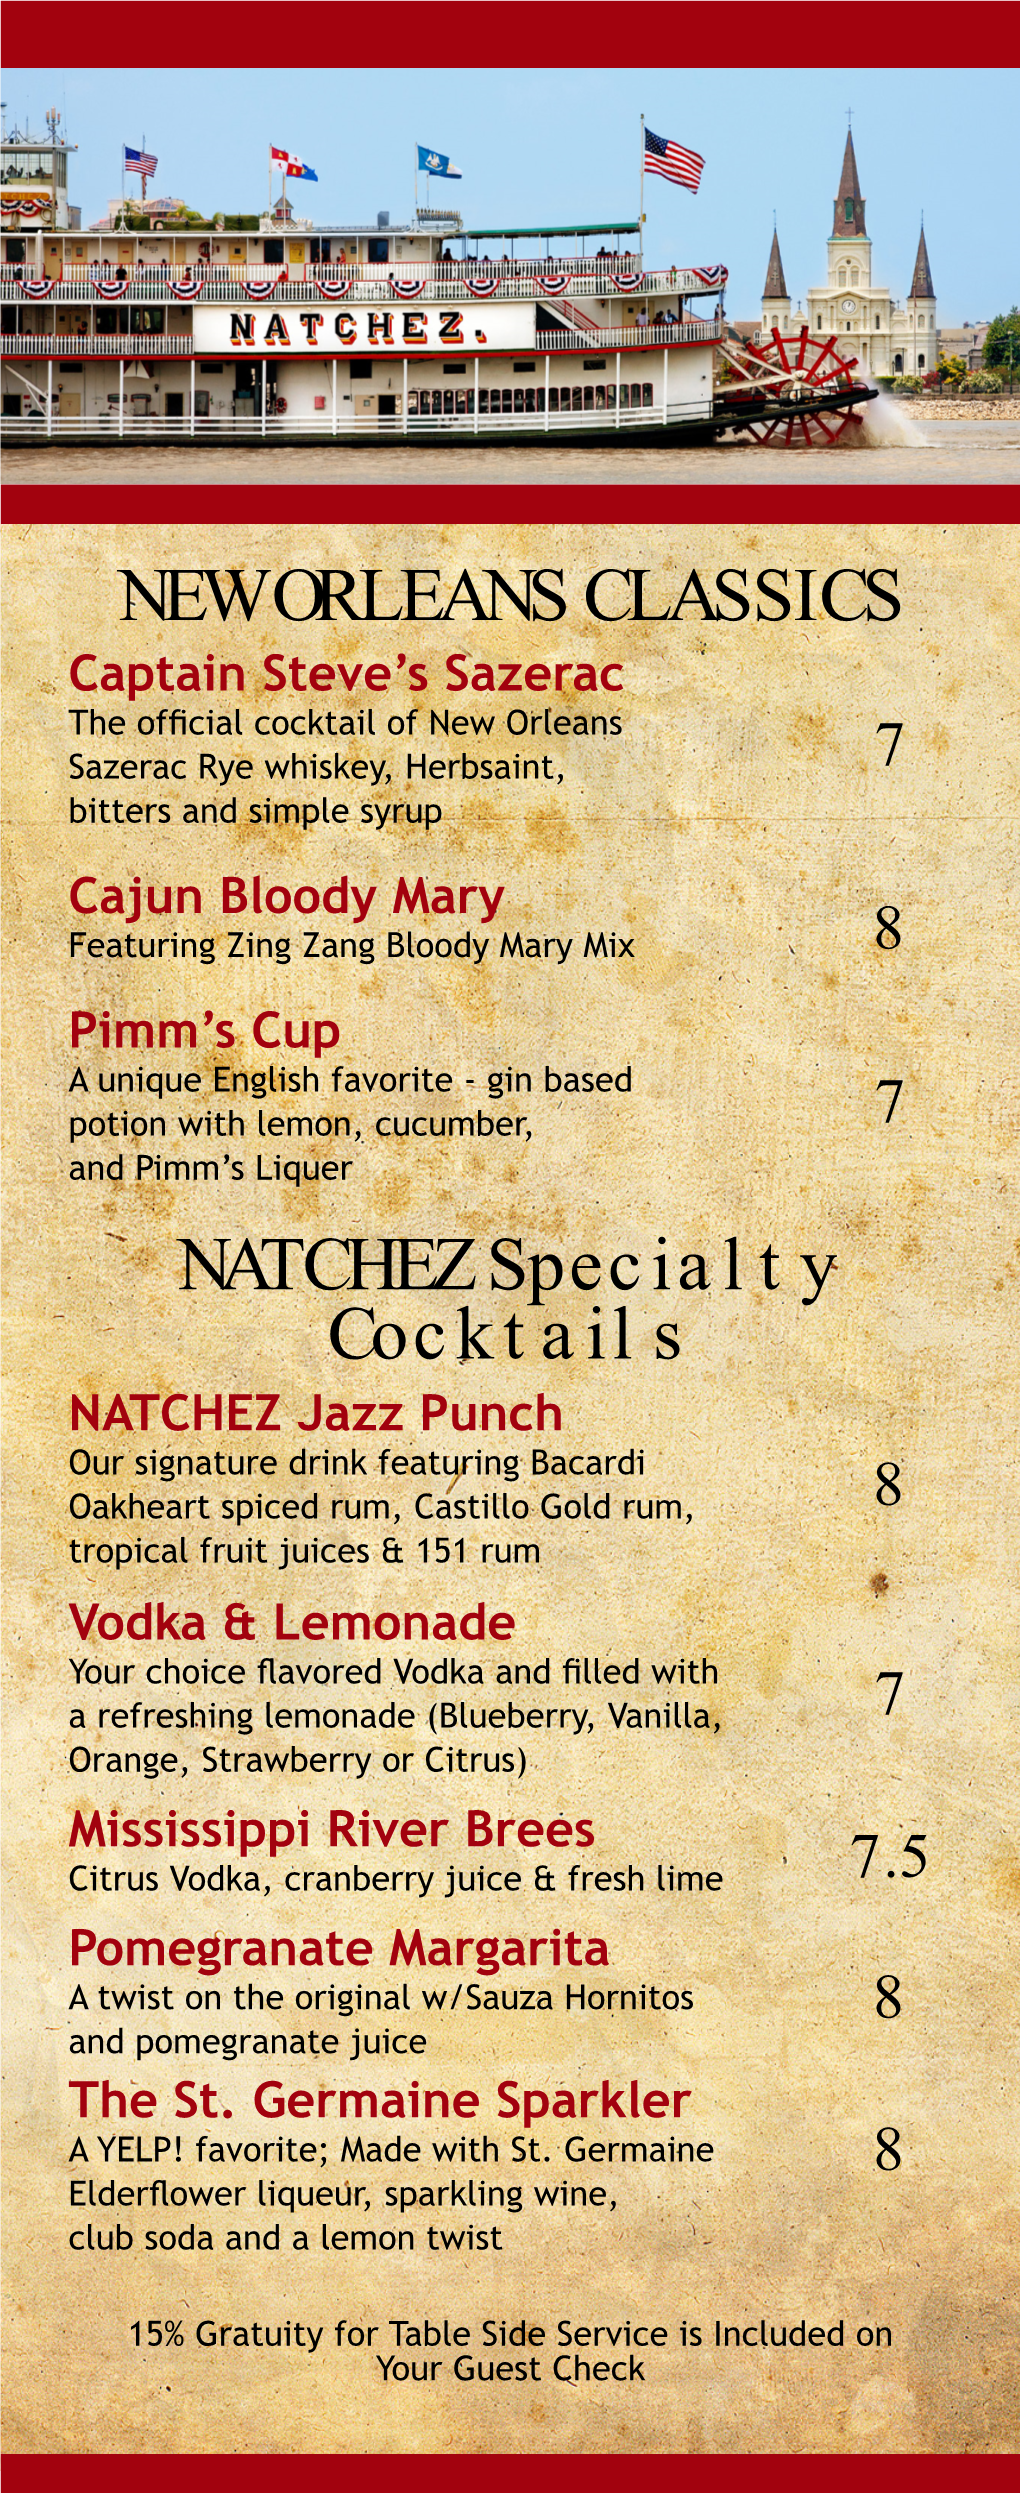 NEW ORLEANS CLASSICS NATCHEZ Specialty Cocktails